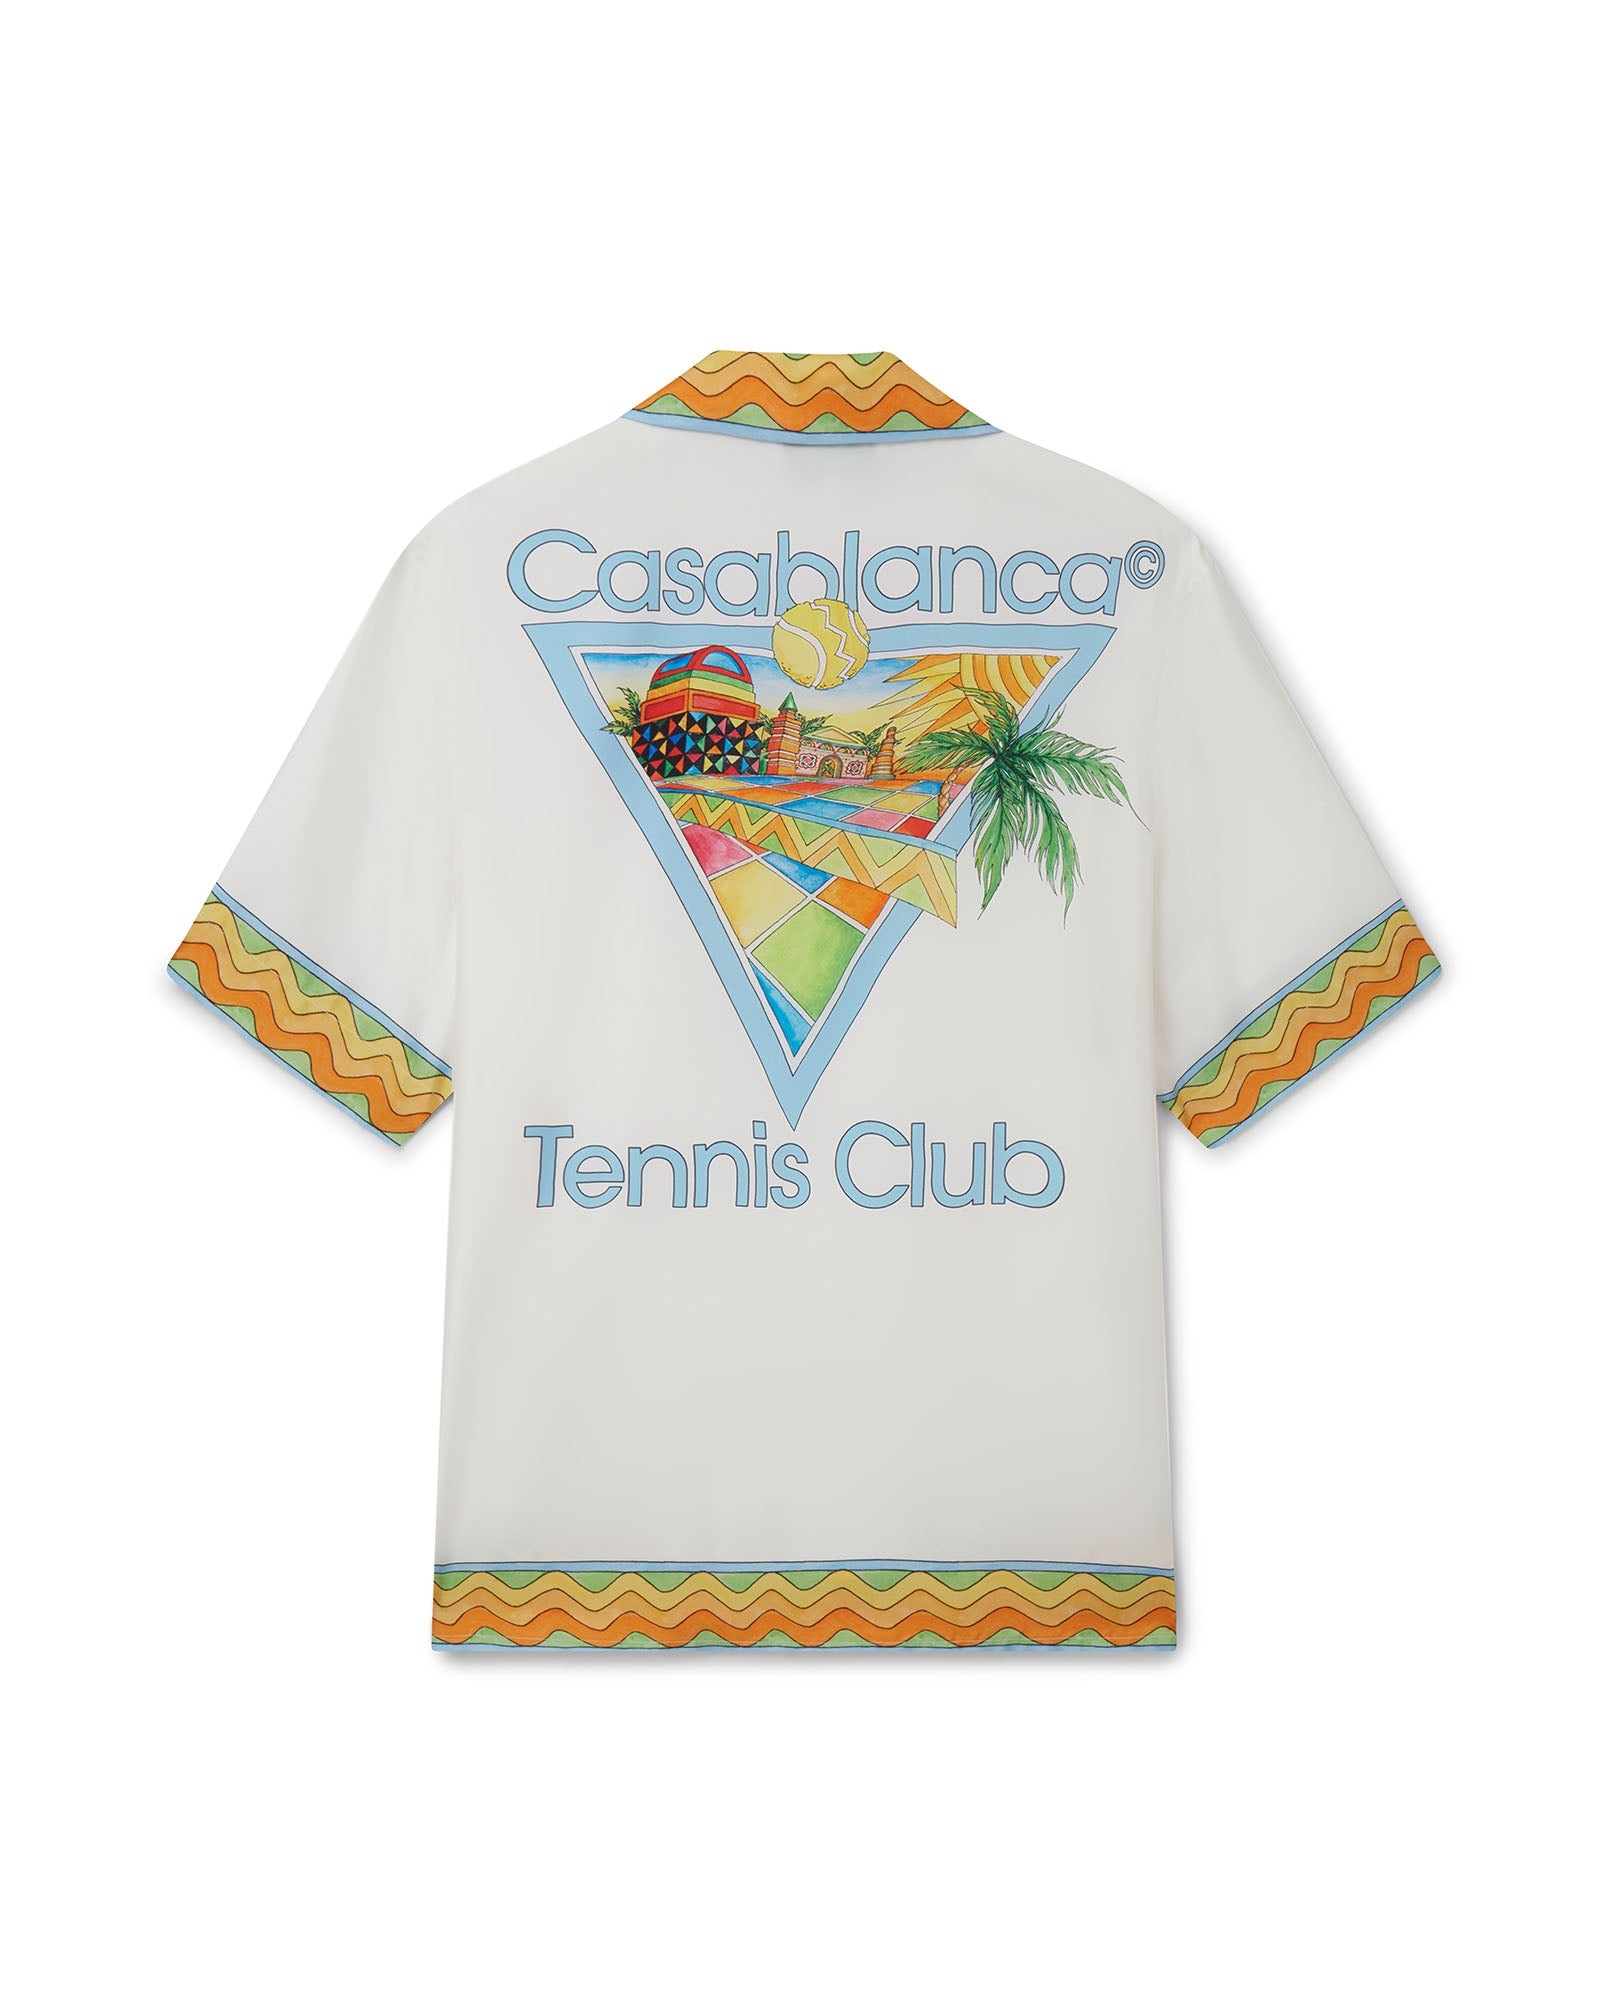 Afro Cubism Tennis Club Silk Shirt - 2